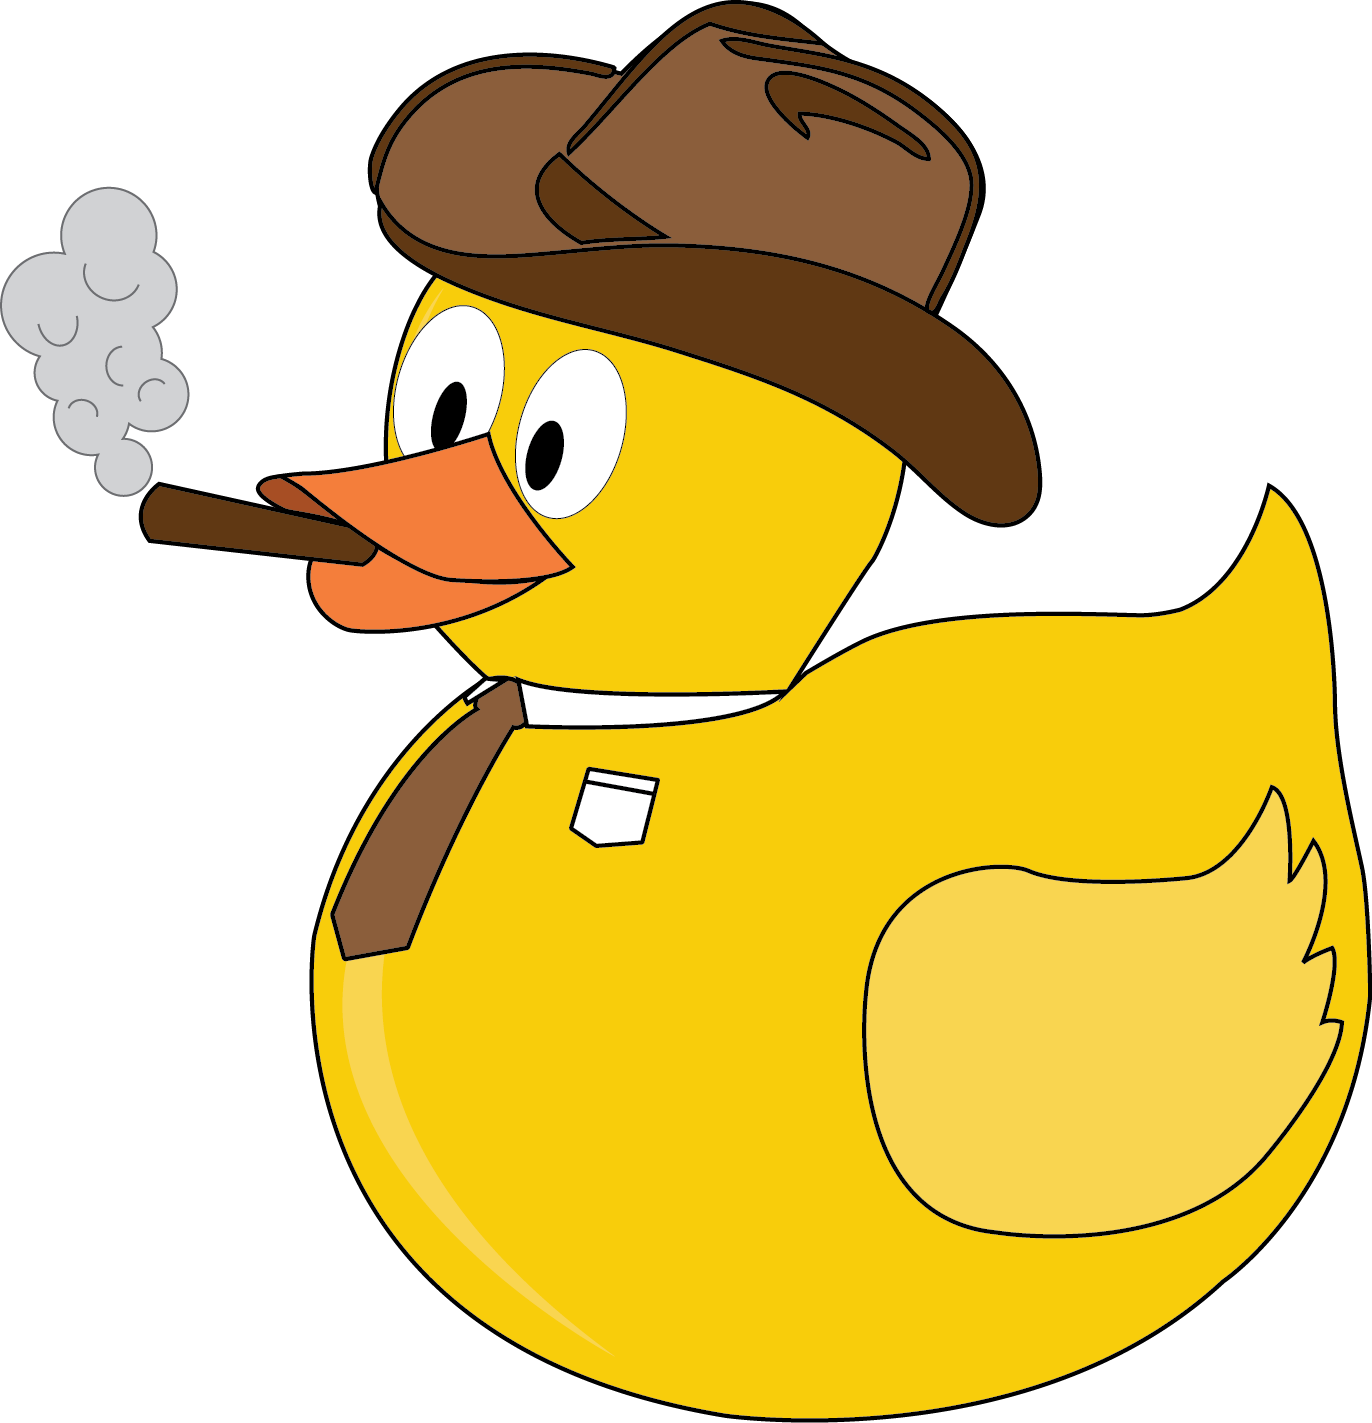 The Smoking Duck logo